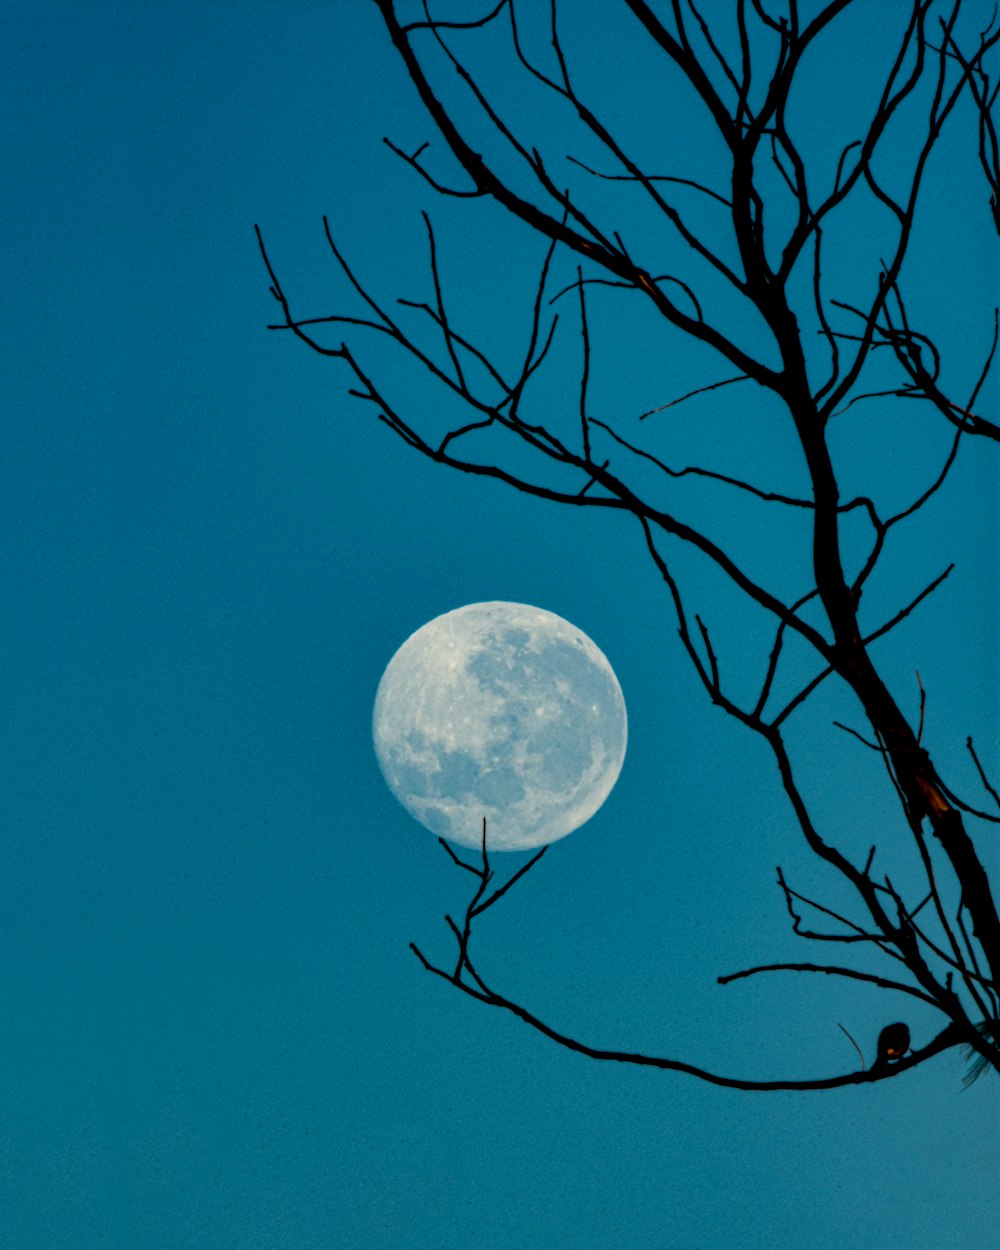 bare tree showing full moon